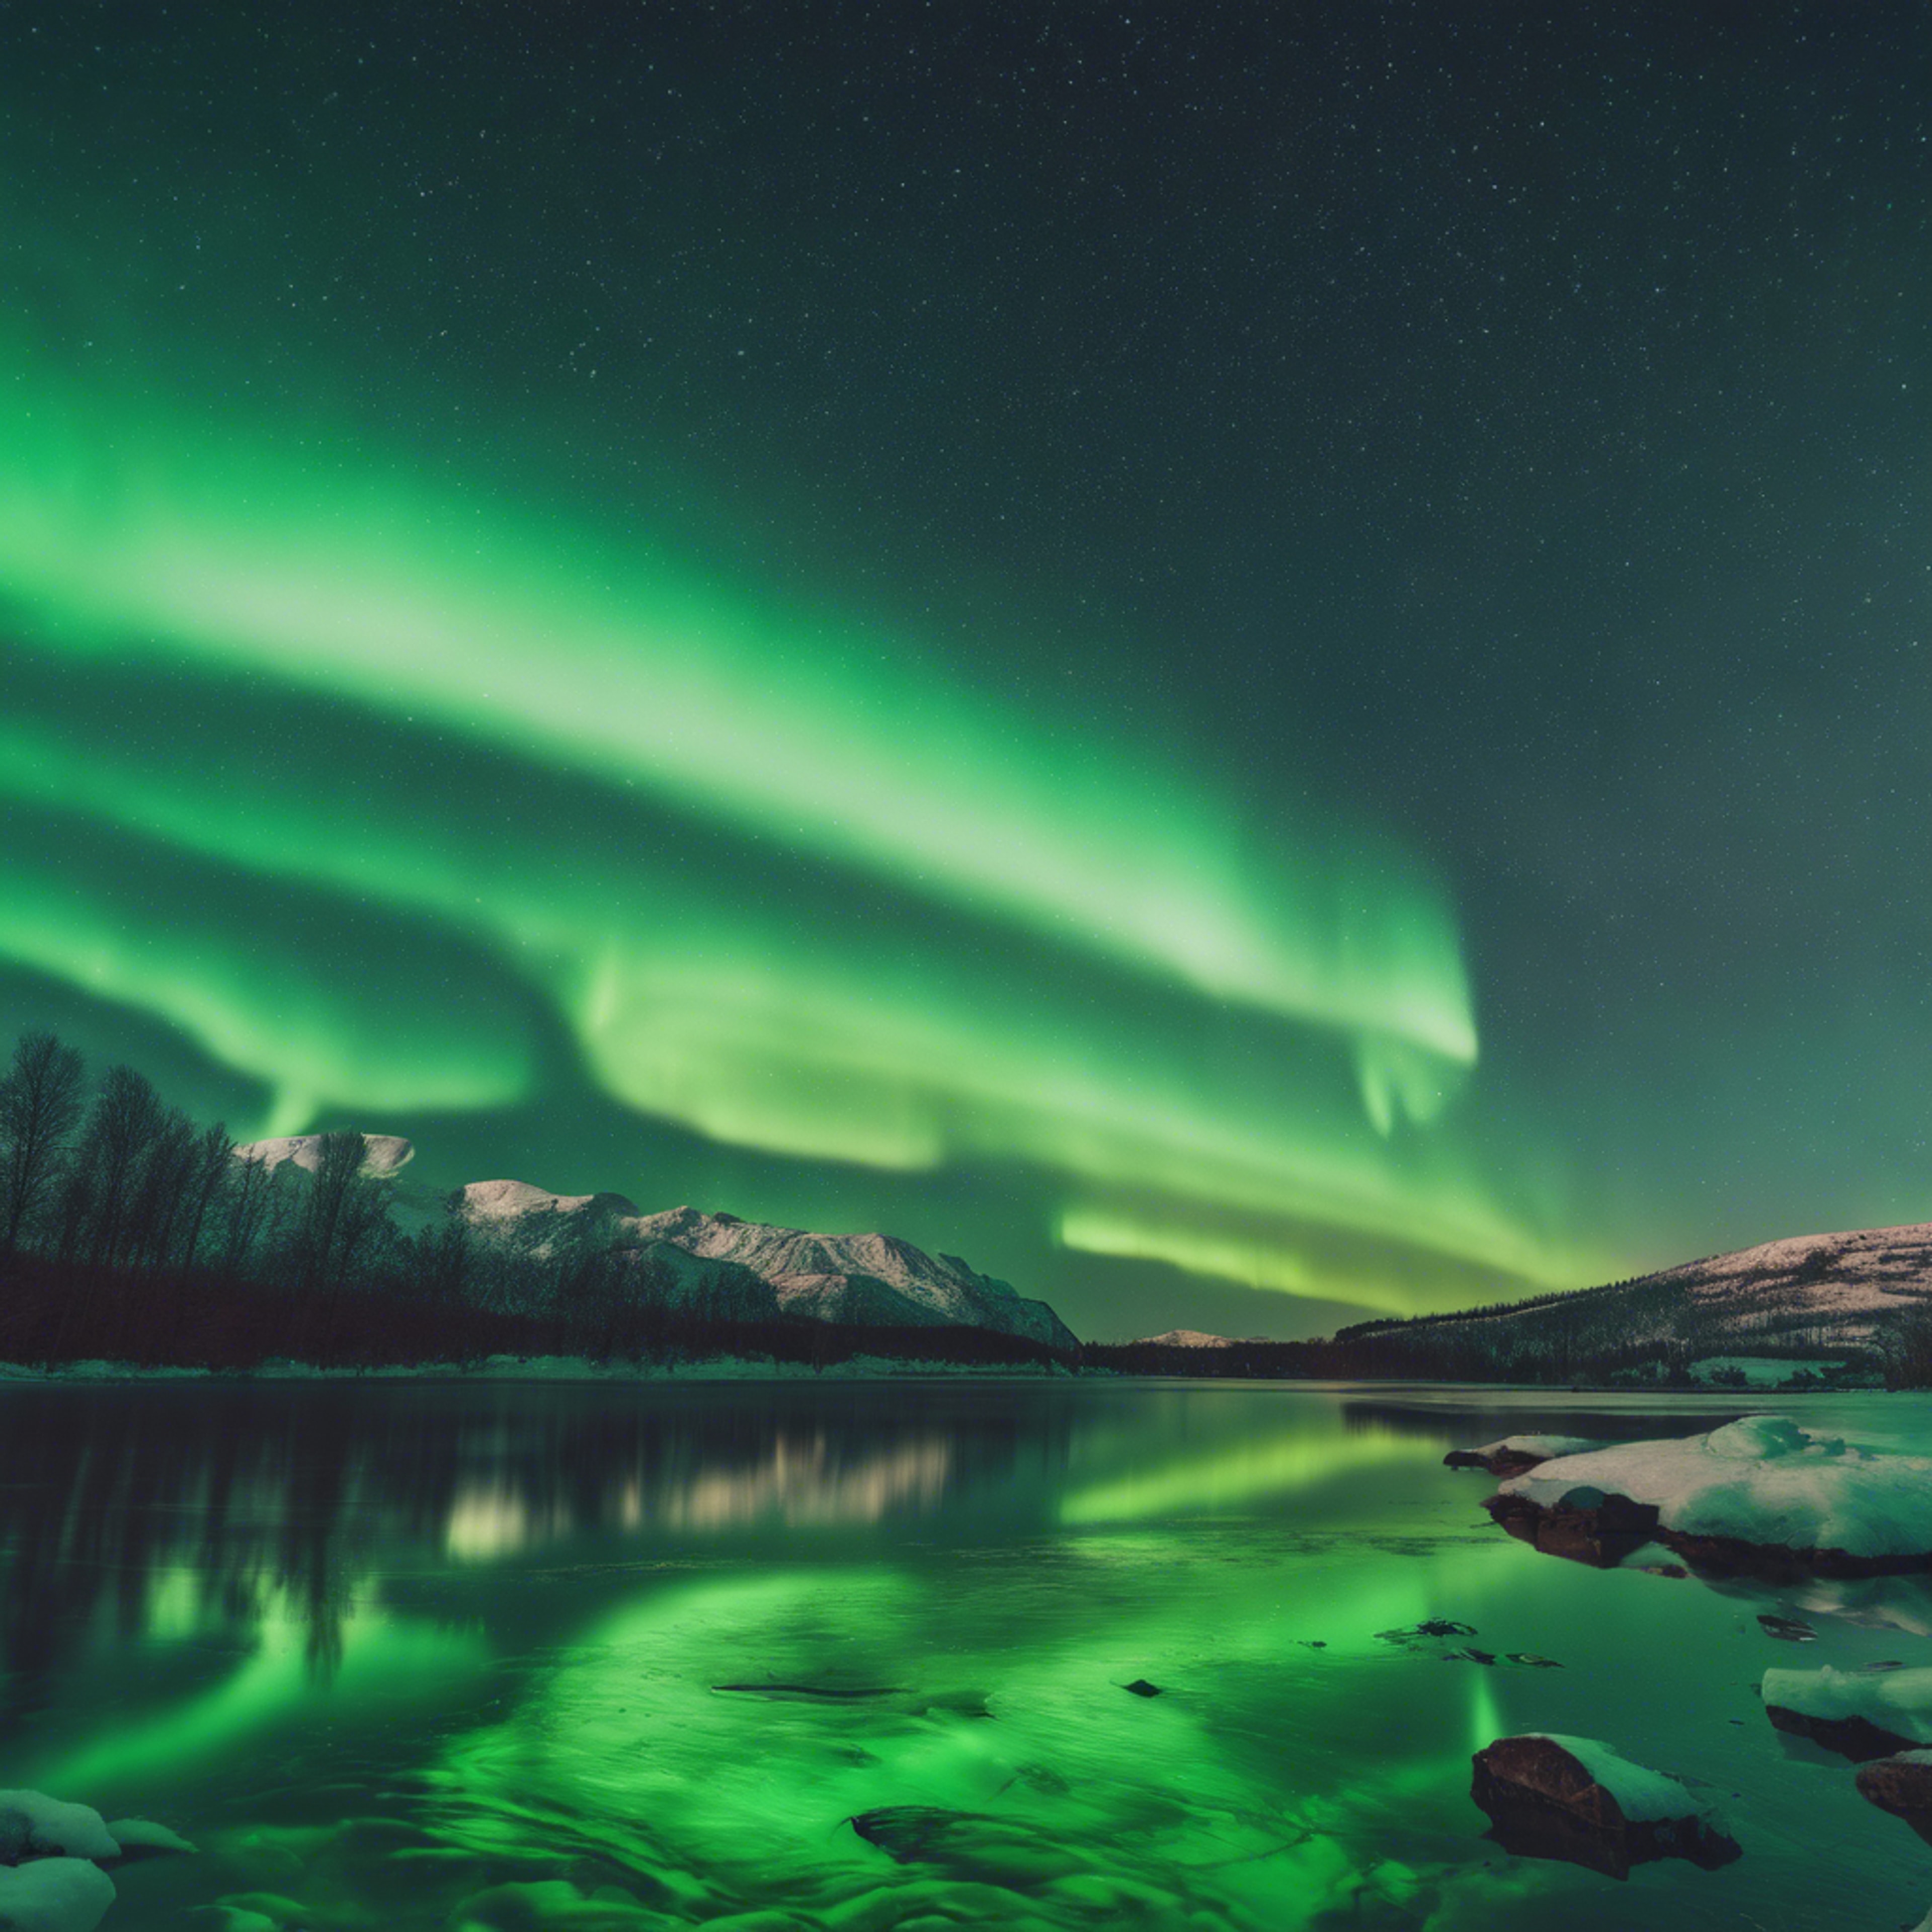 Cool green aurora borealis in the night sky. Hintergrund[6739bc2aef4a46929ef0]